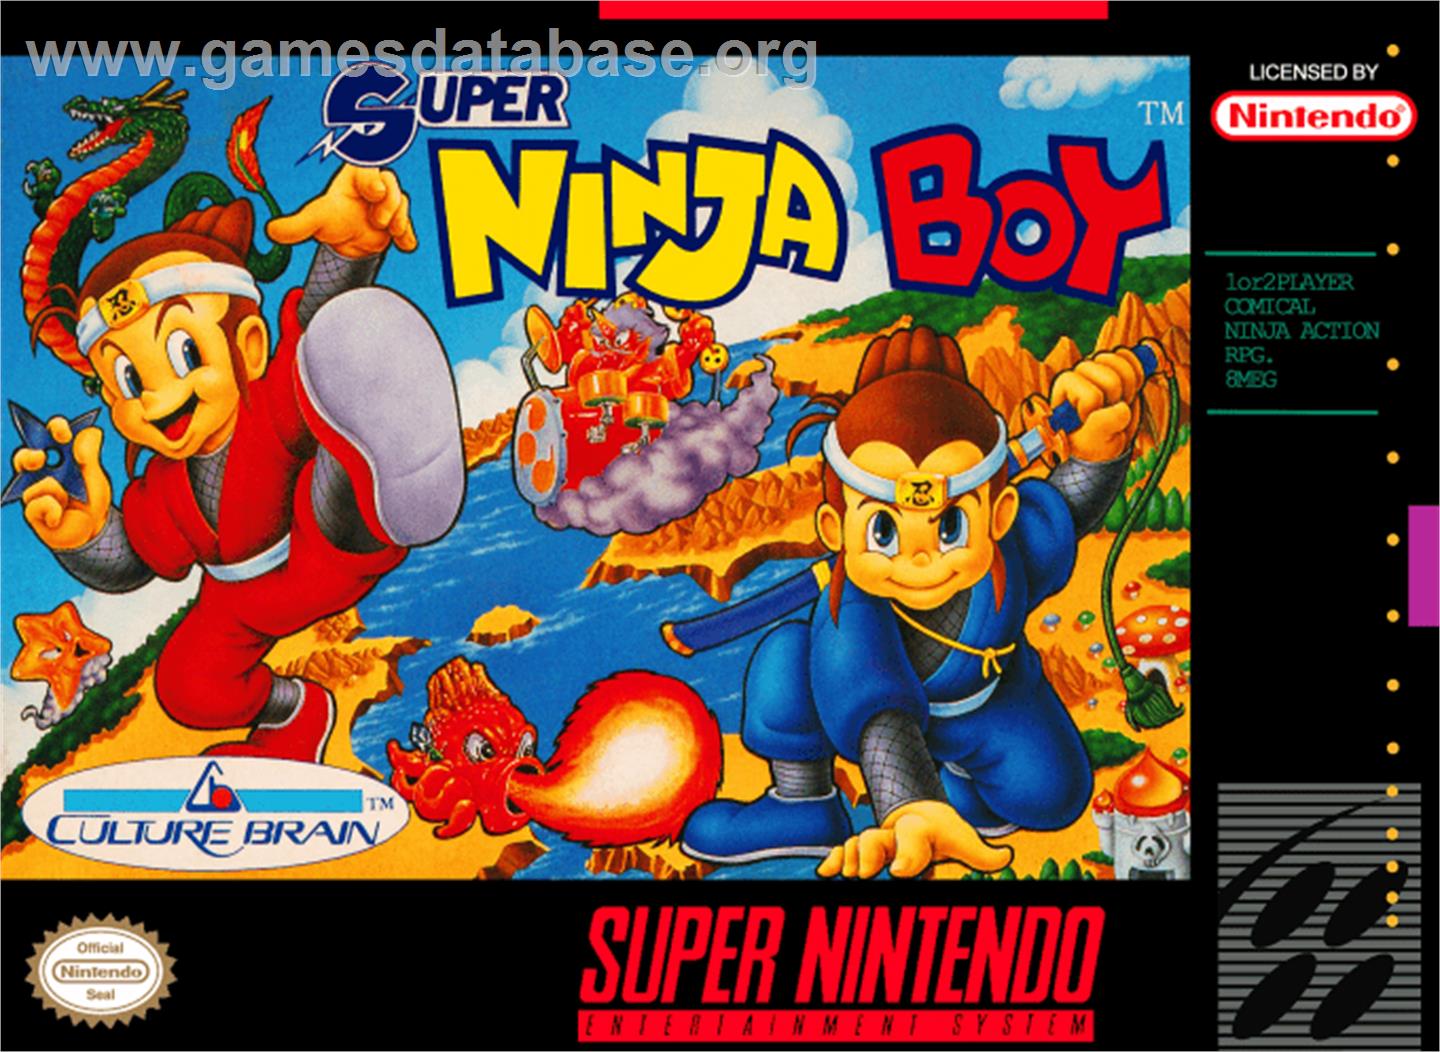 Super Ninja Boy - Nintendo SNES - Artwork - Box